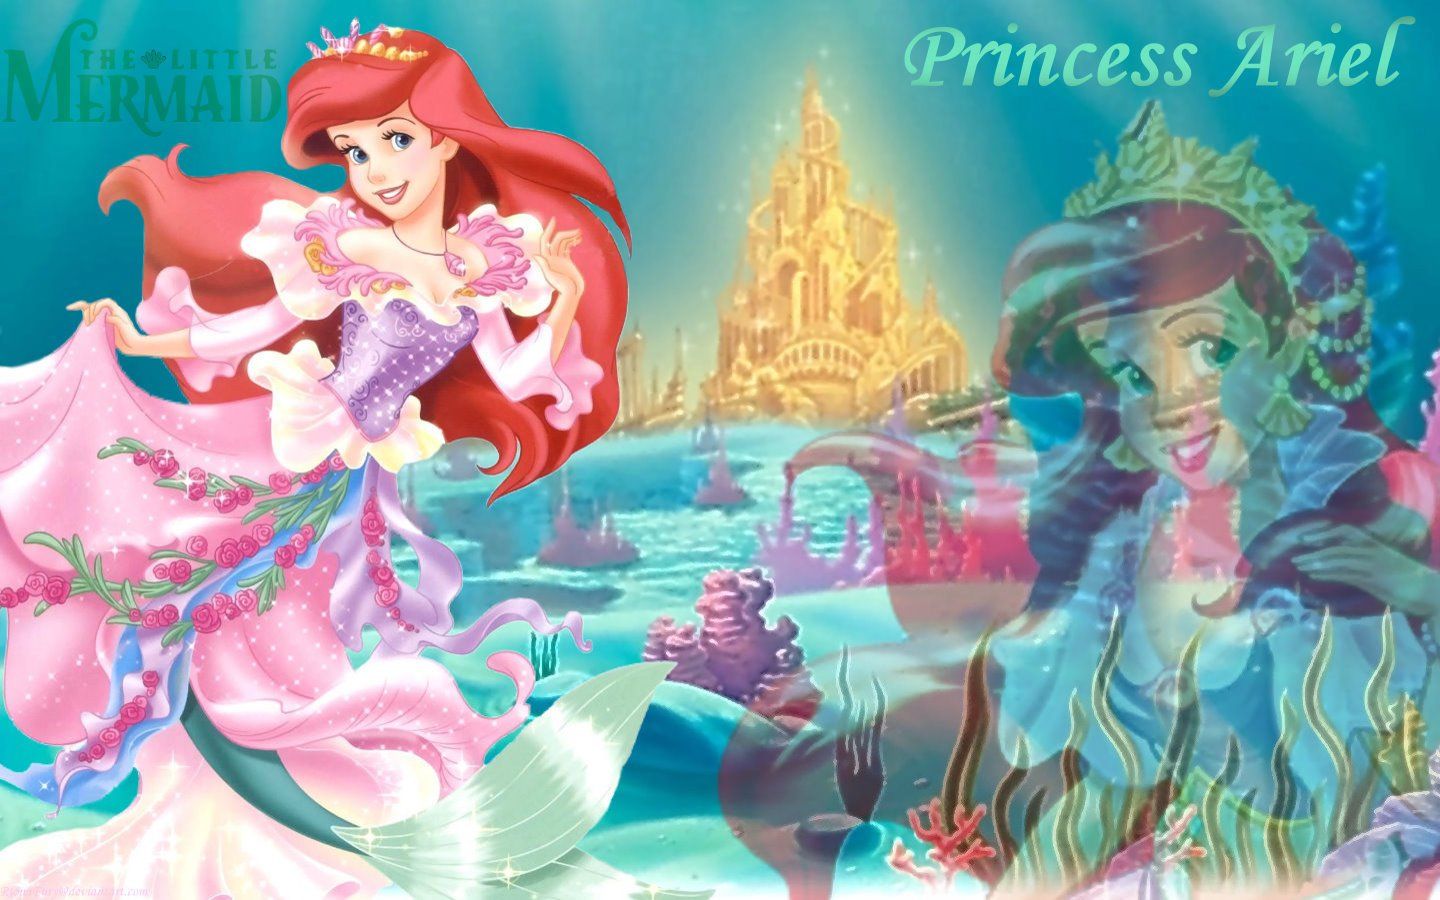 Free download The Little Mermaid Princess Ariel [1440x900] for your Desktop, Mobile & Tablet. Explore Princess Ariel Wallpaper. Disney Princess Wallpaper, Little Mermaid Wallpaper, Disney Princess Ariel Wallpaper